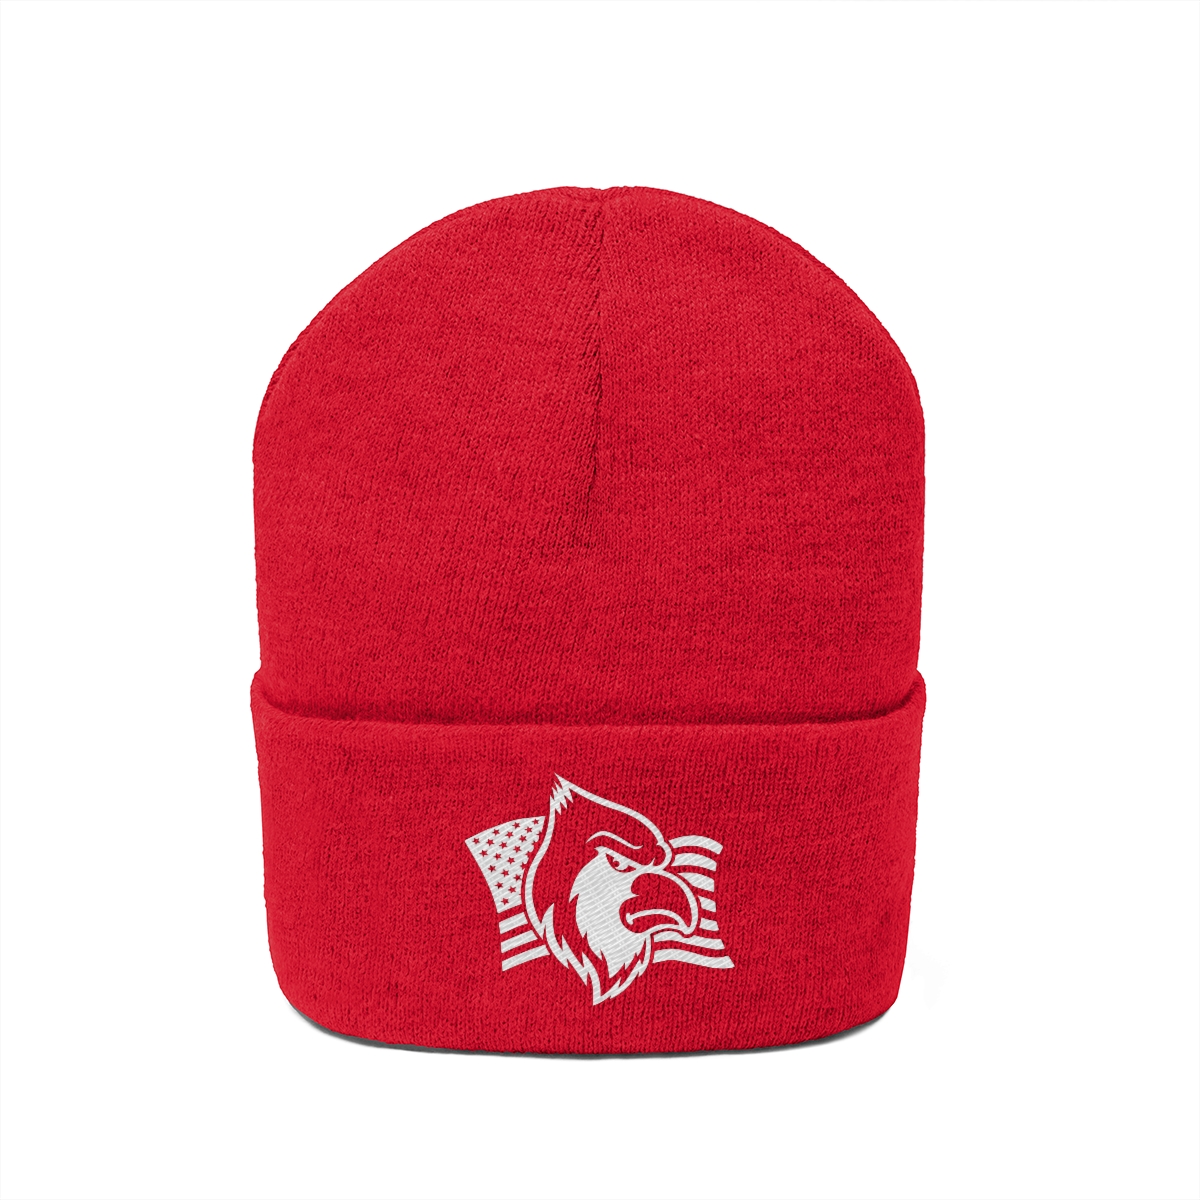 University of Louisville Knit Hat Louisville Cardinals Beanie